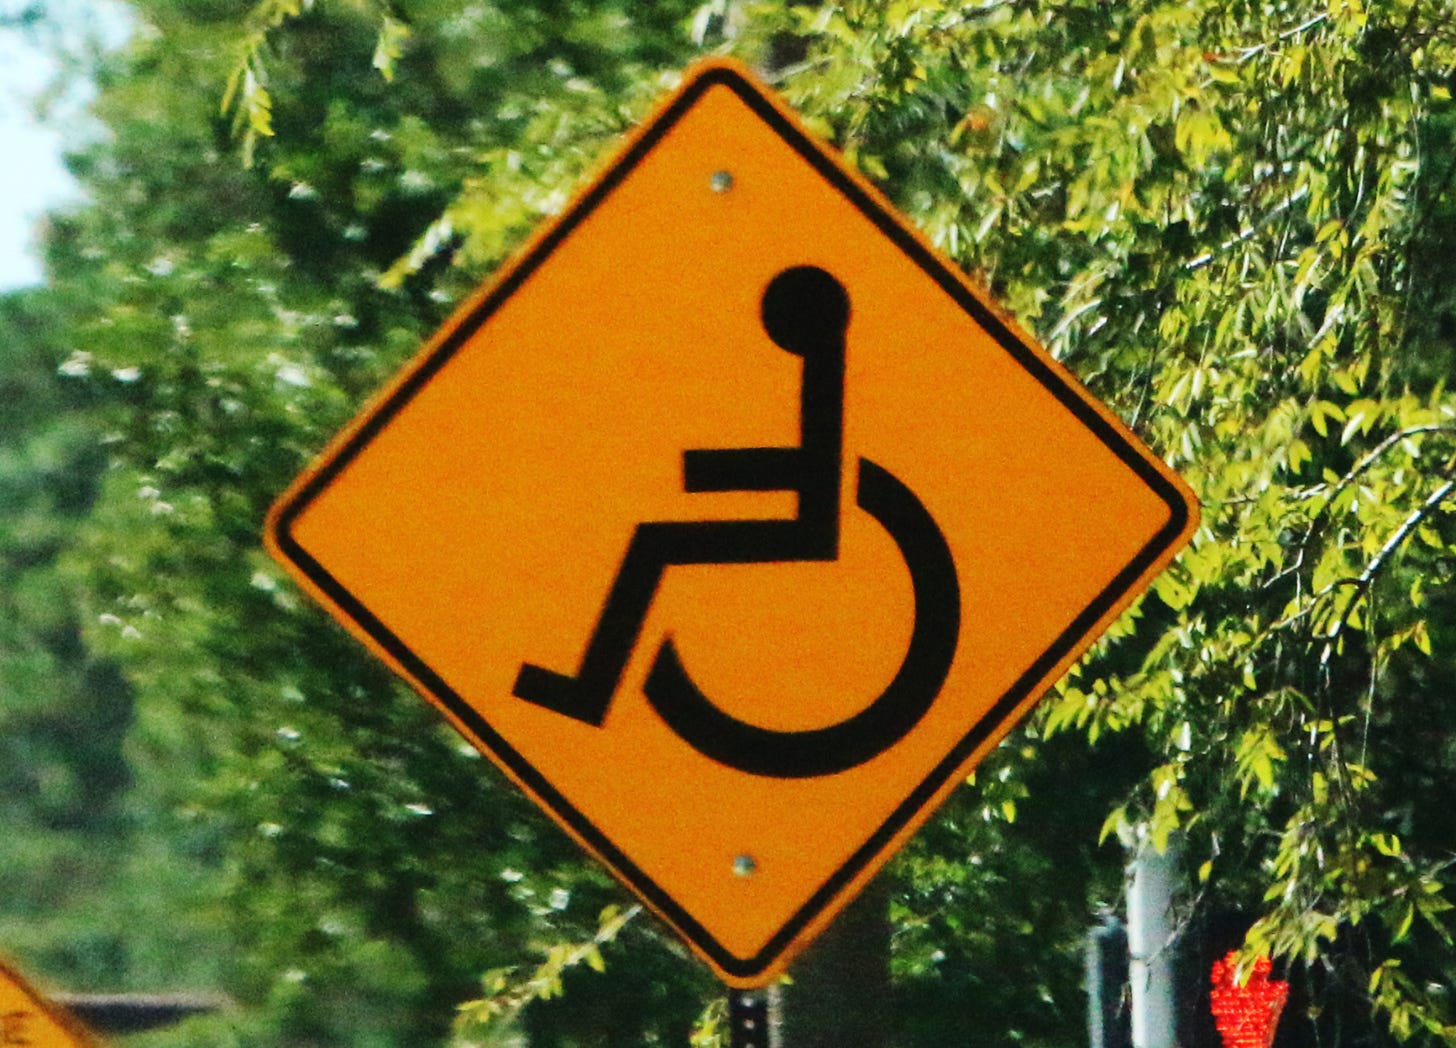 Wheelchair symbol on a diamon-shaped street sign